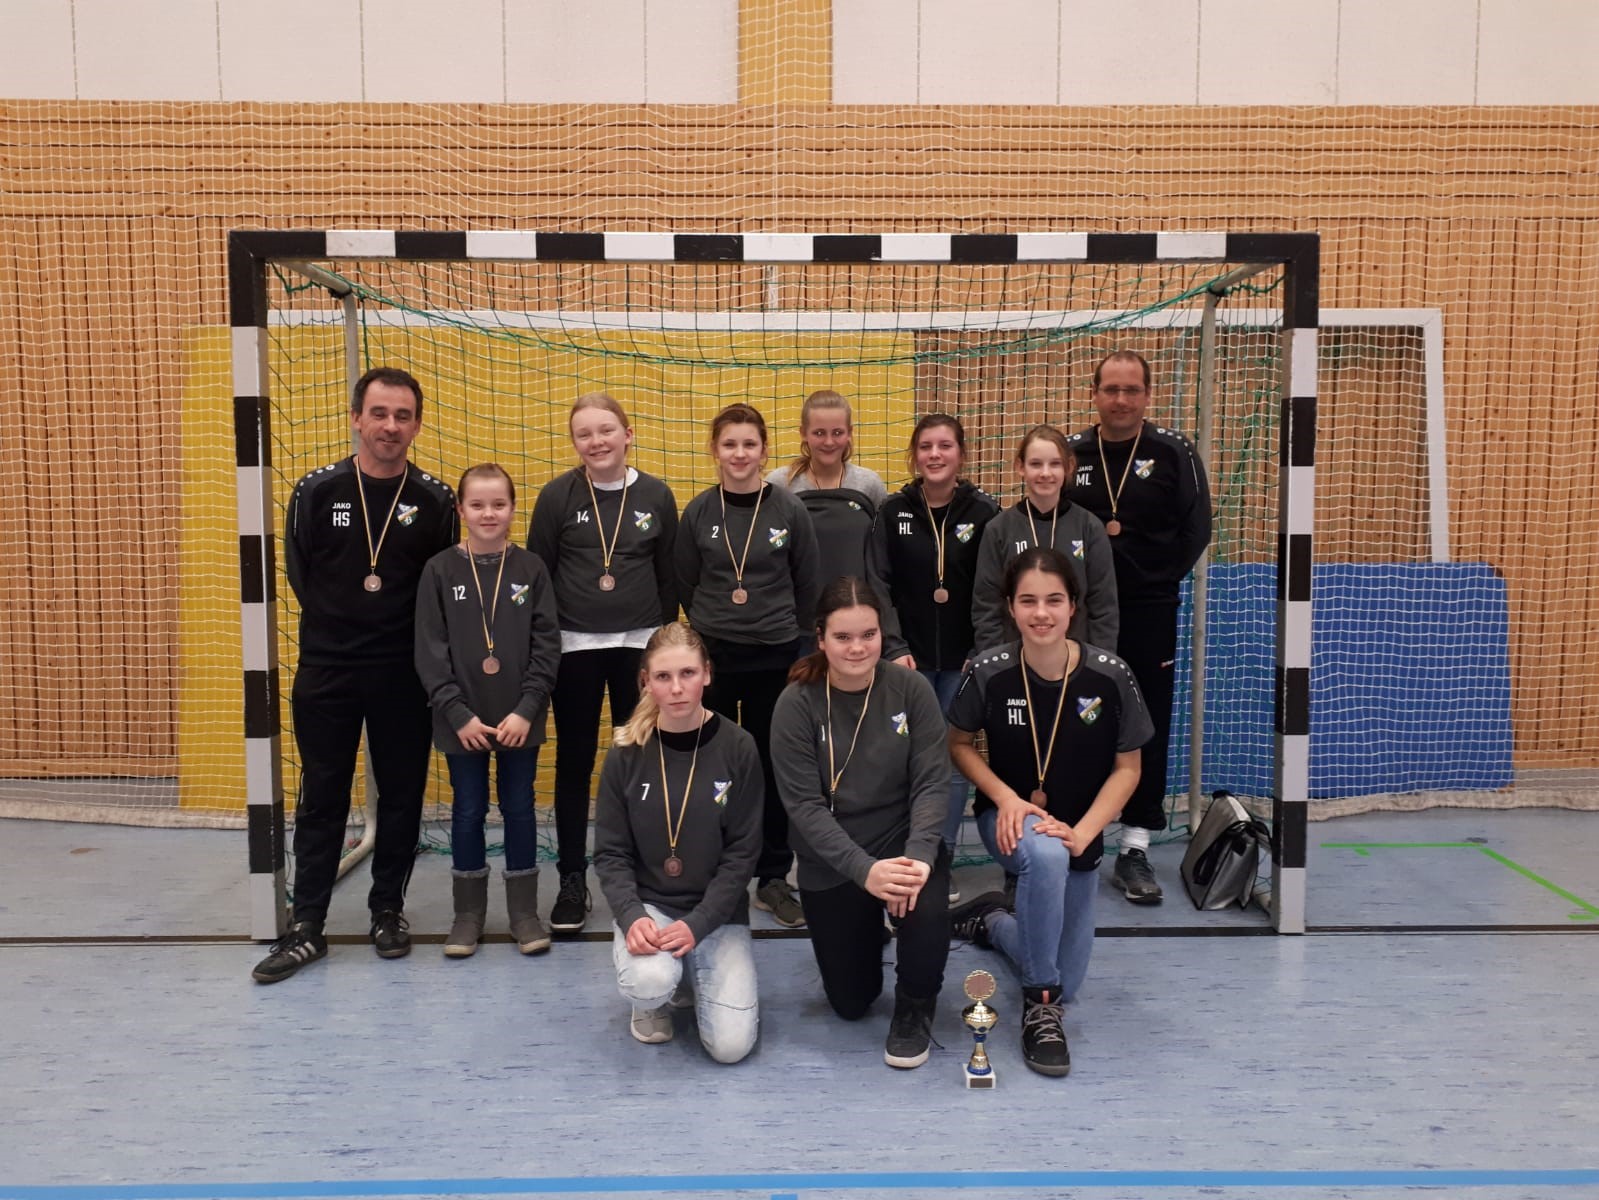 Sängerstadtregion Mädchen belegten dritten Platz in Spremberg